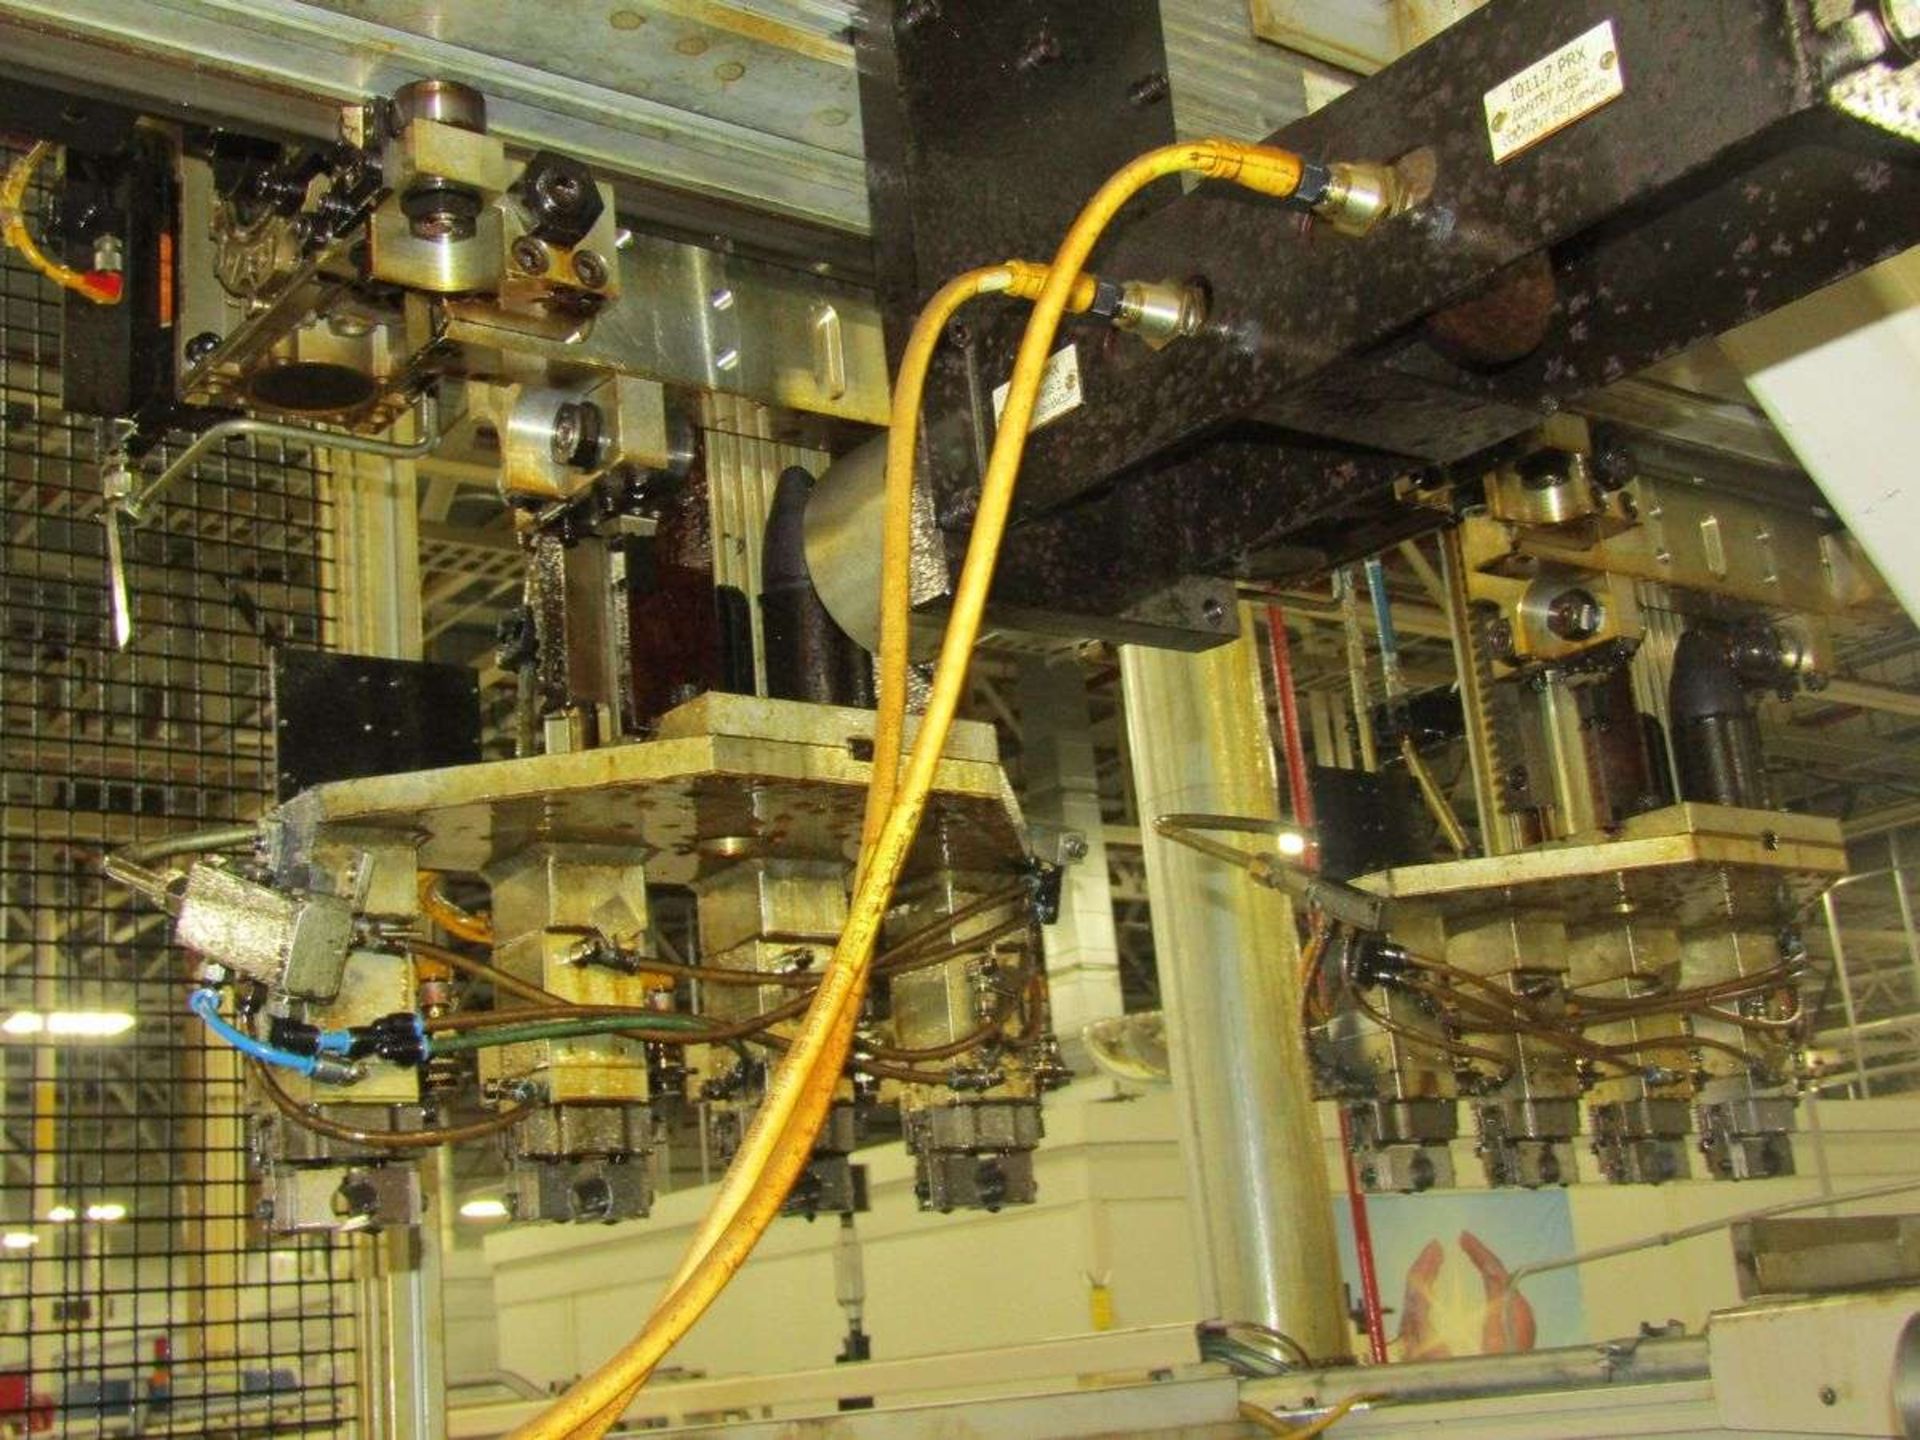 2002 TBT/Nagel Precision Inc. 2M320-4 Deep Hole Drilling Machine - Image 24 of 30